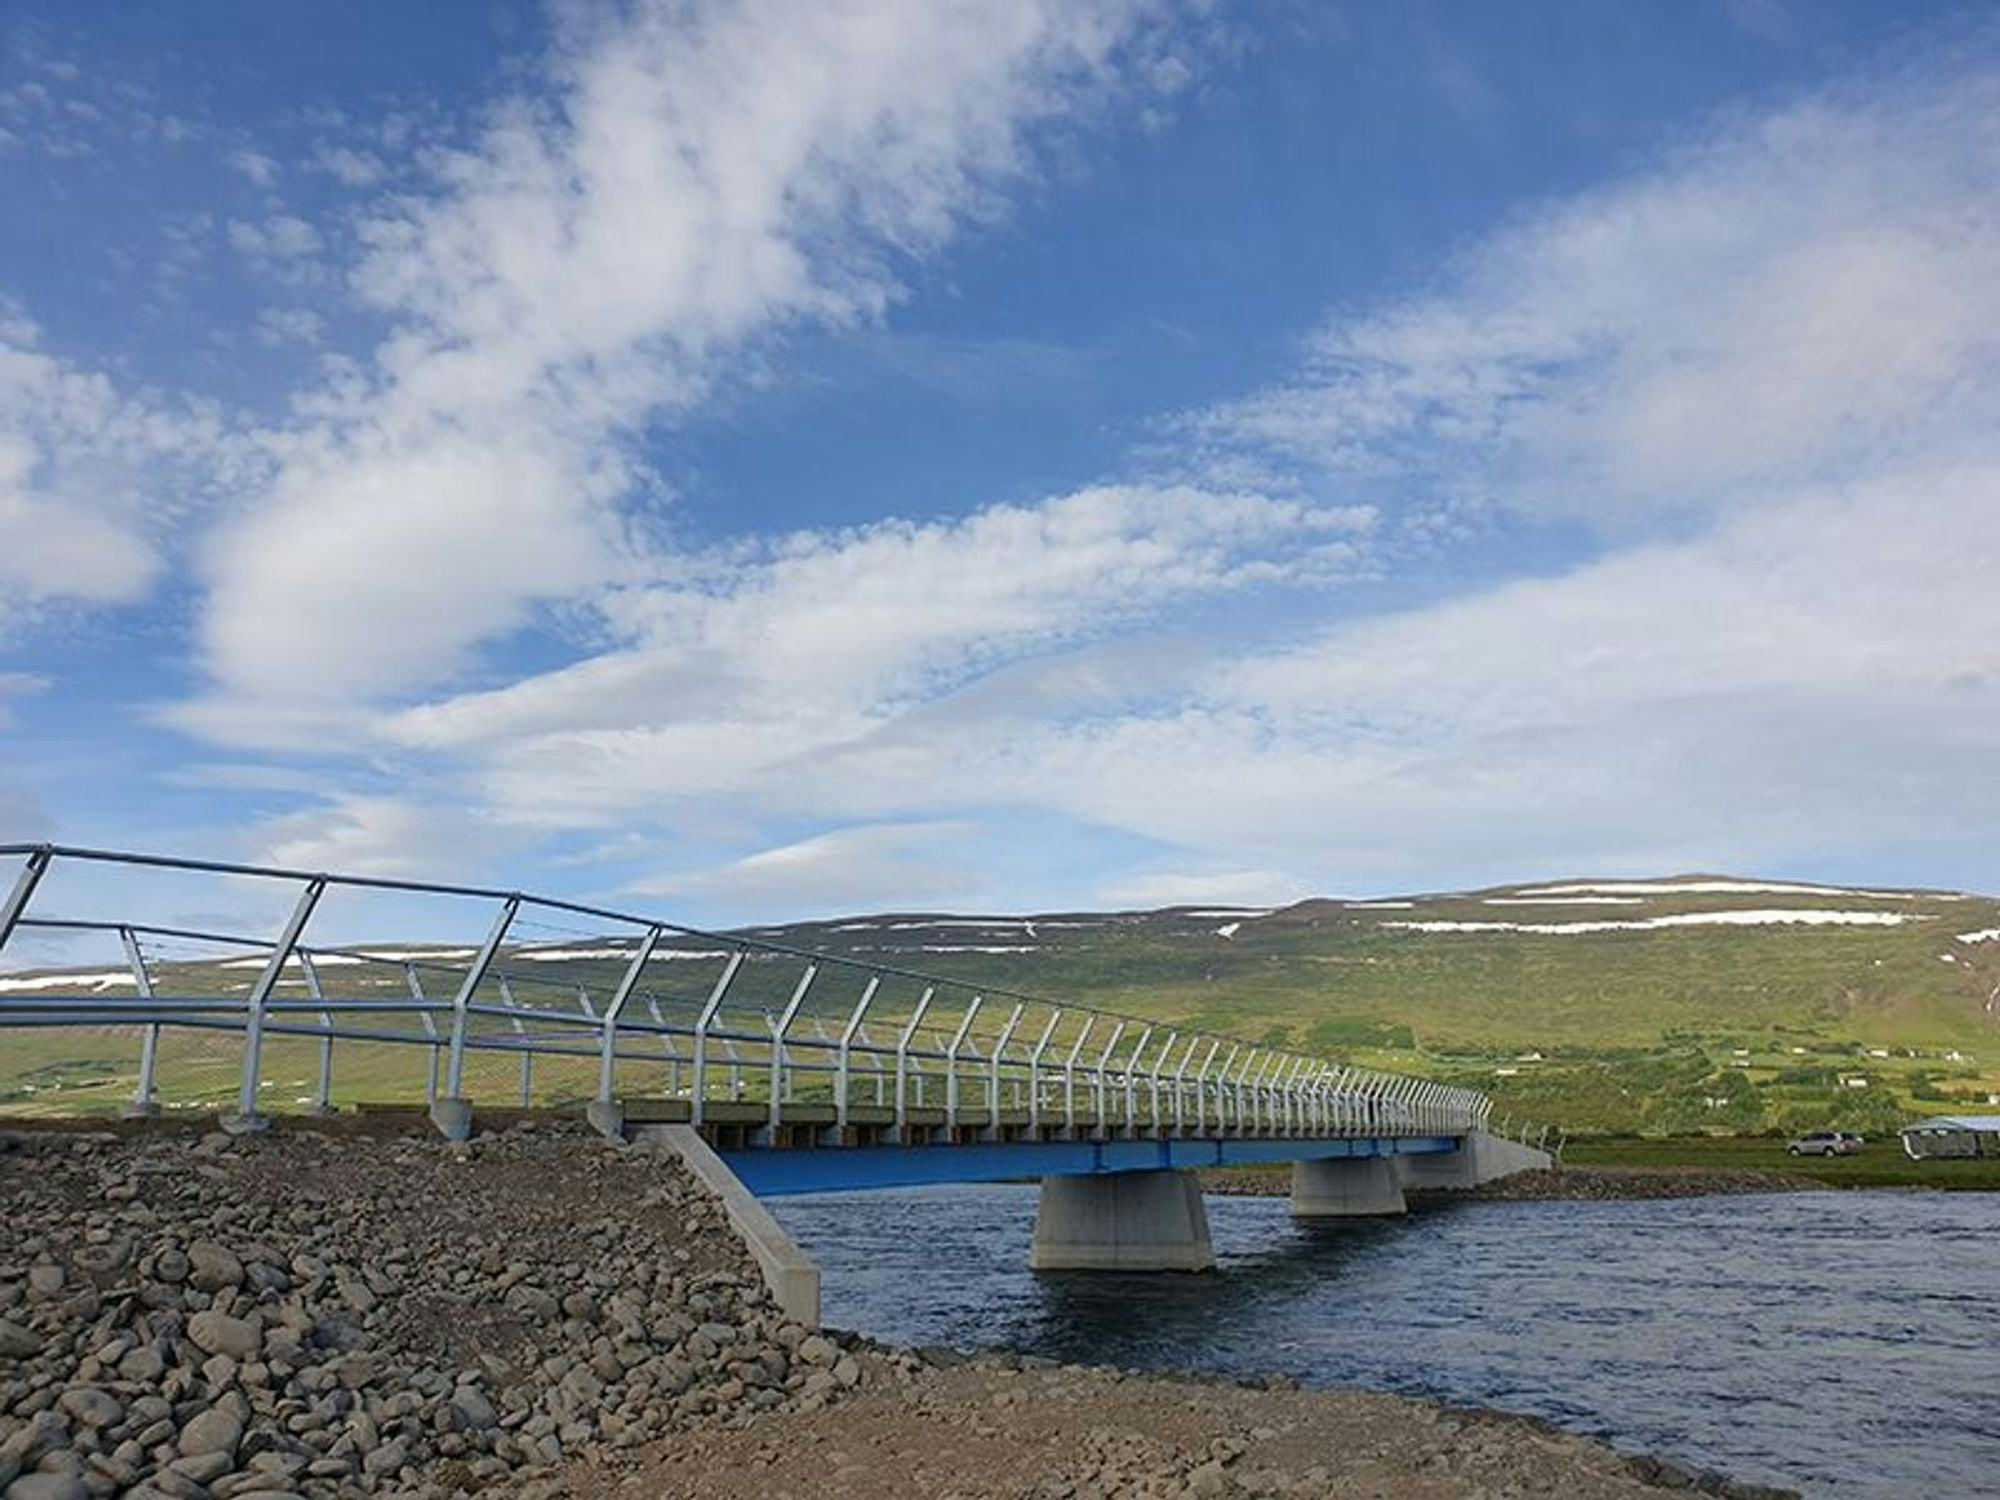 A curving pedestrian bridge with metal railing over a river set against a hilly landscape